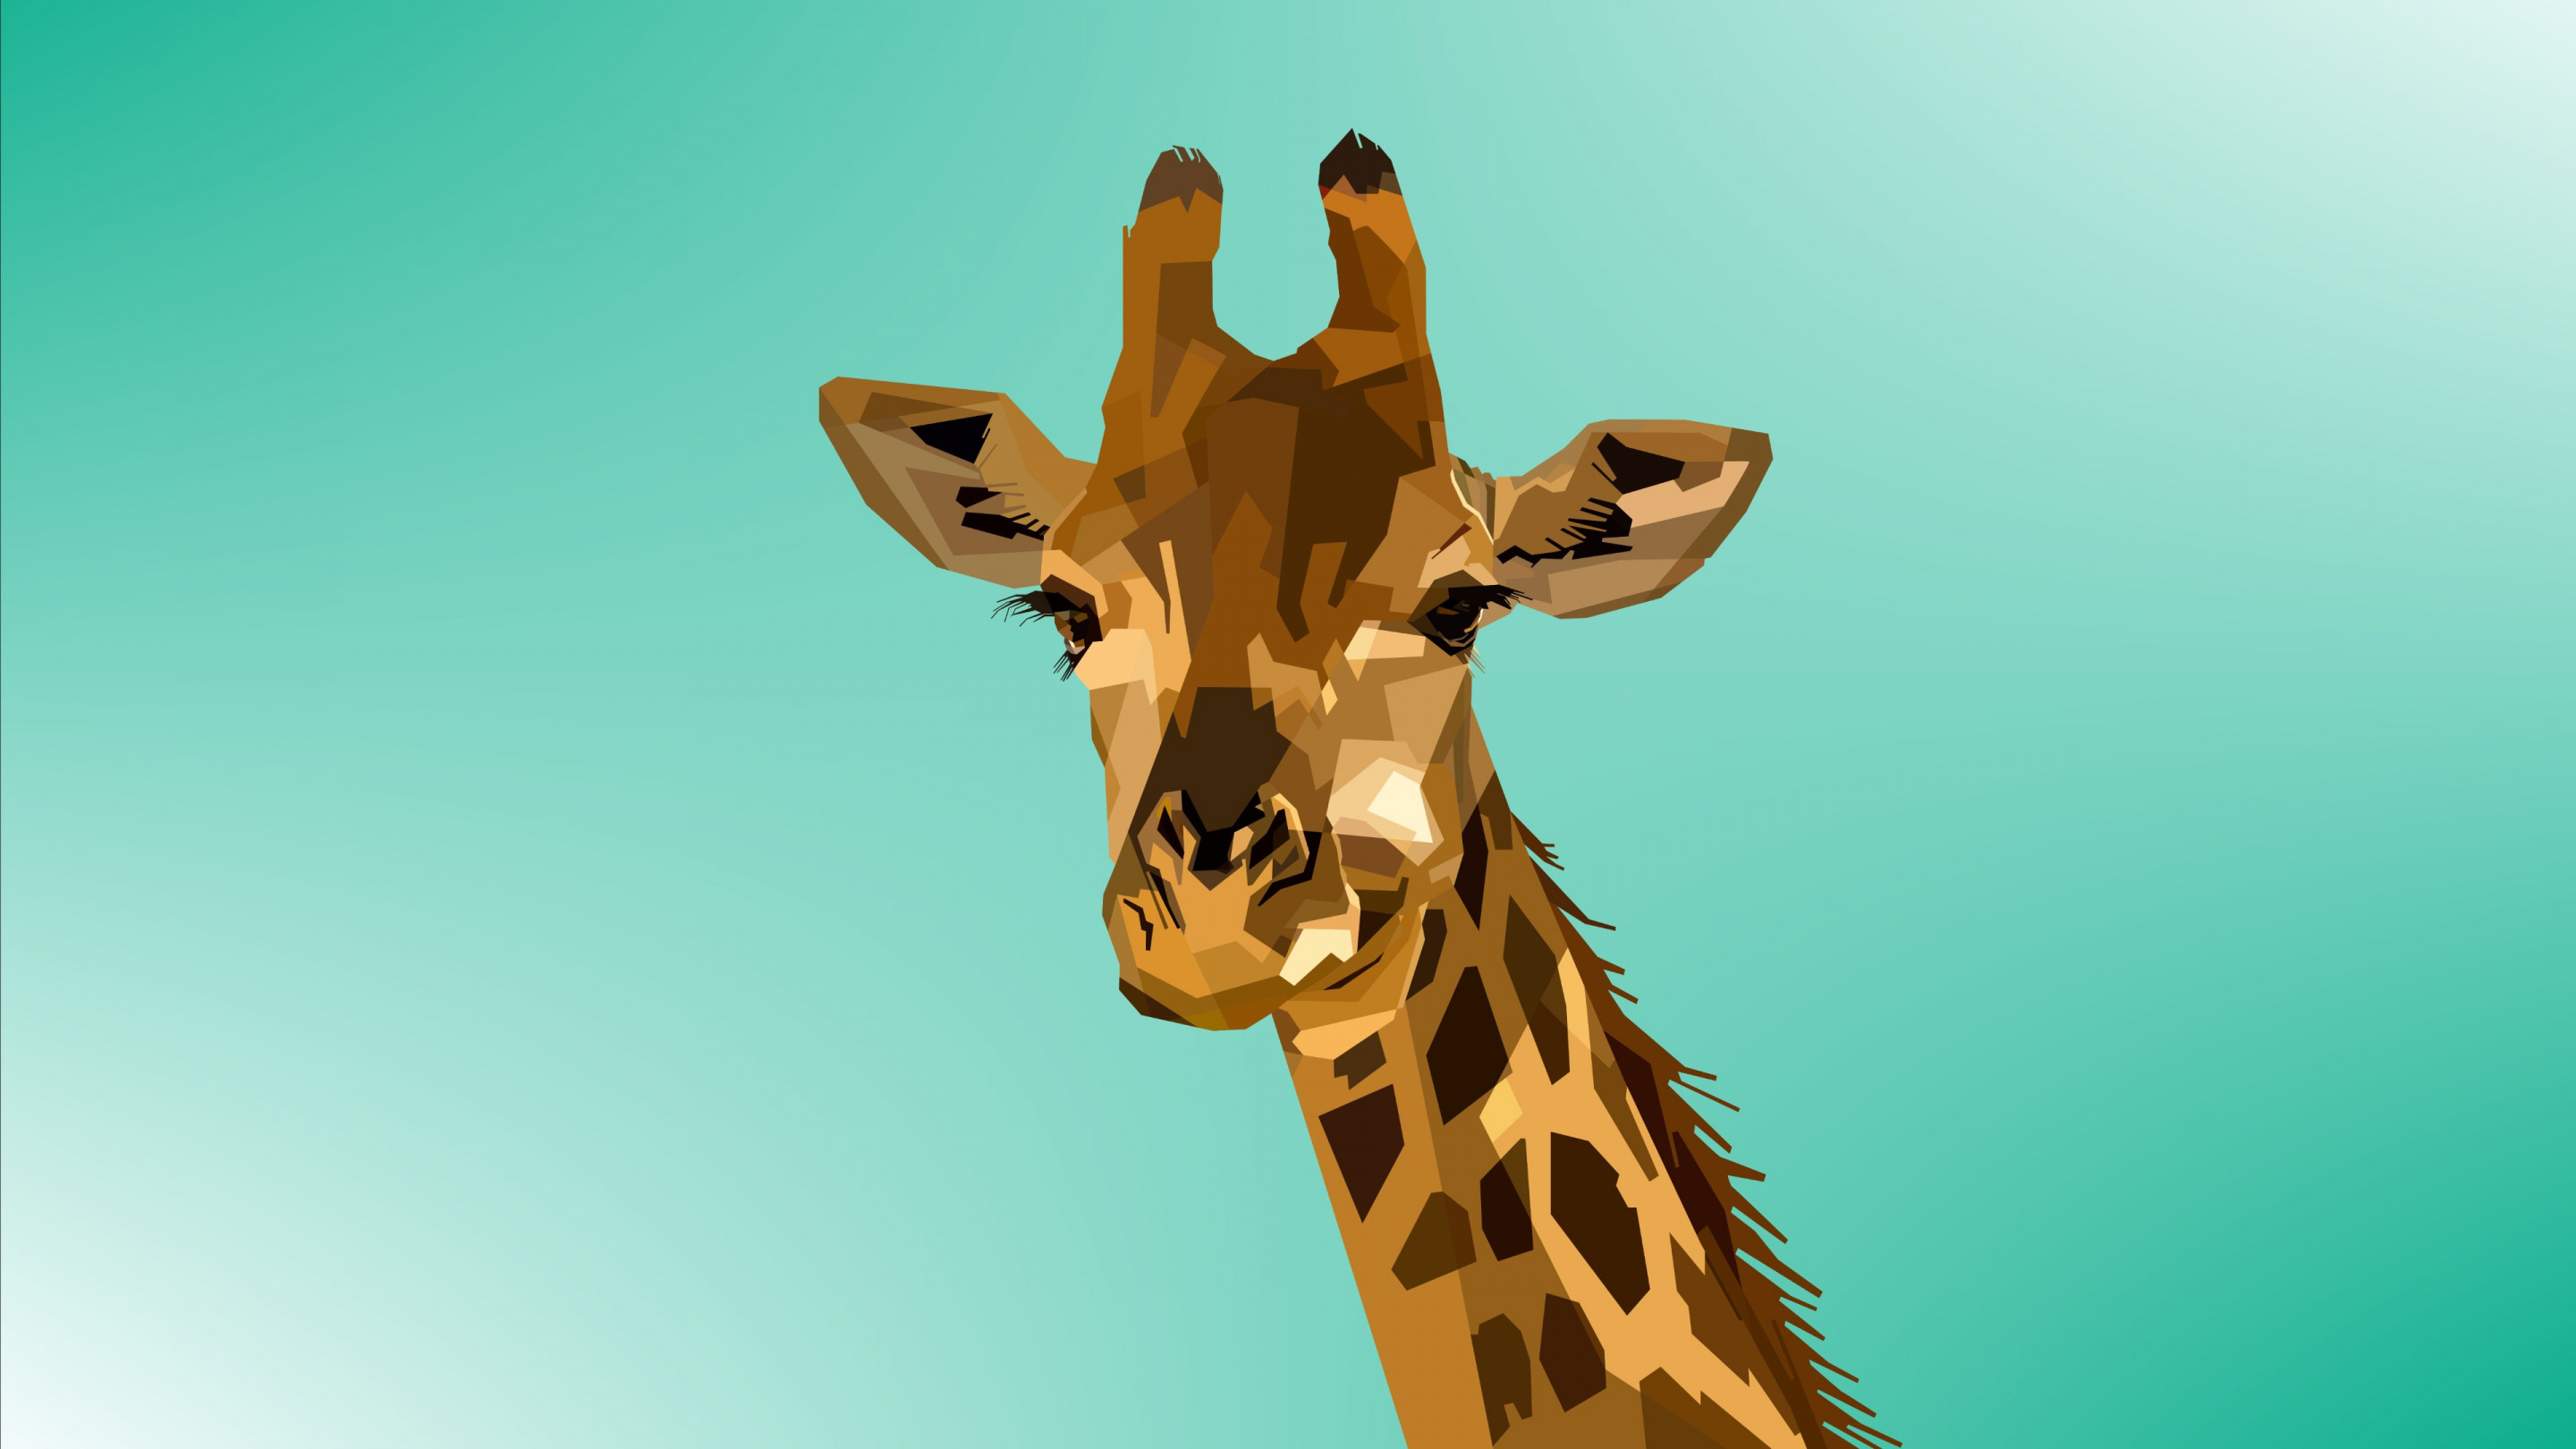 Digital drawing of a giraffe wallpaper 2880x1620